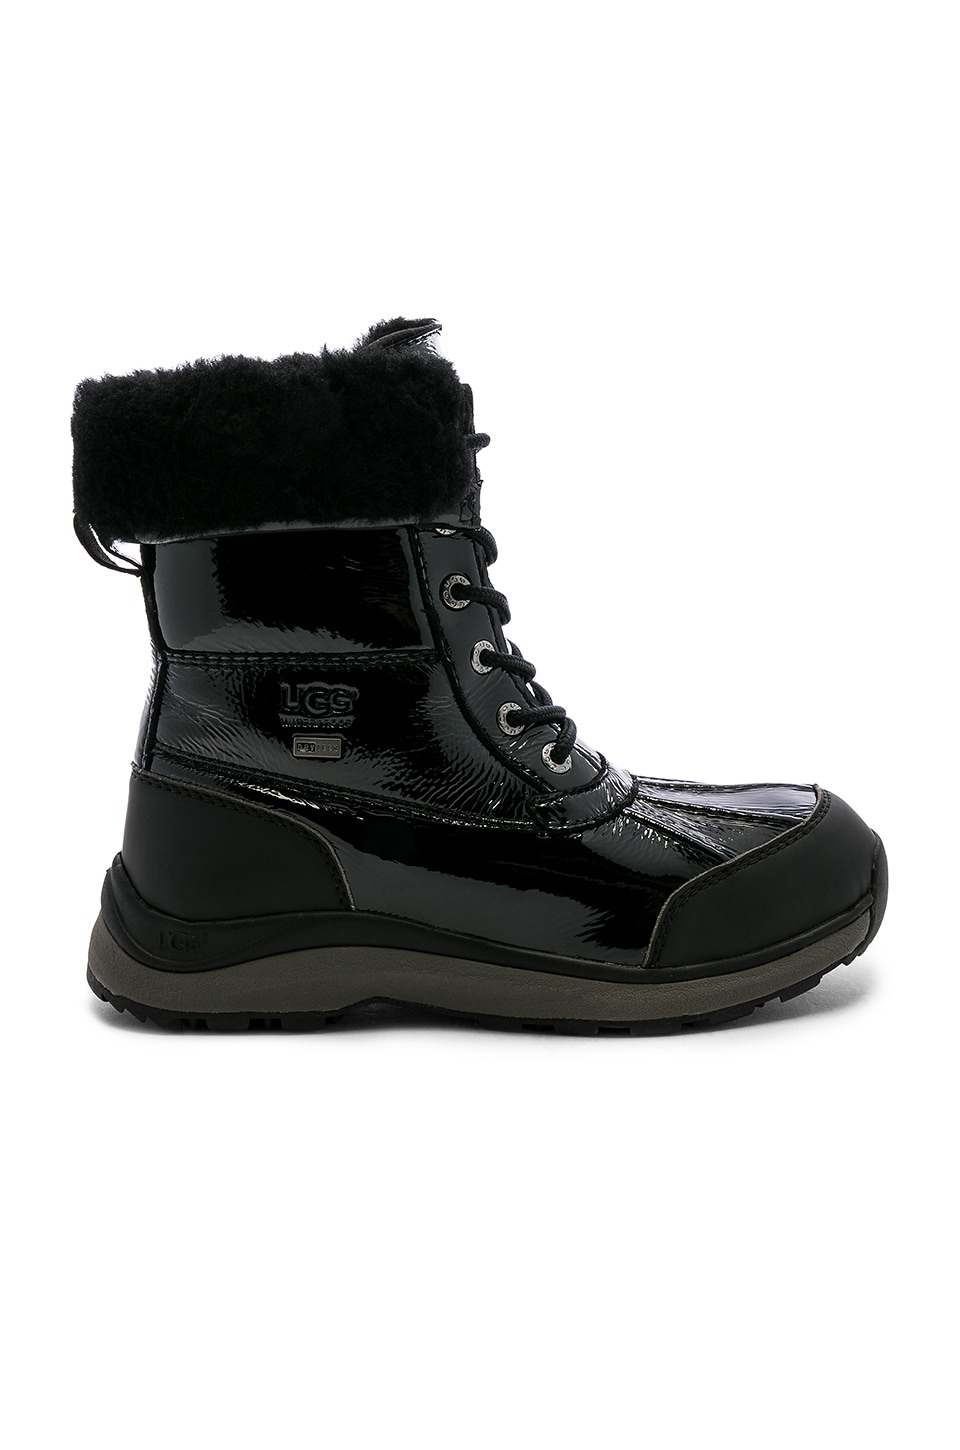 UGG Adirondack III Patent Boot in Black 